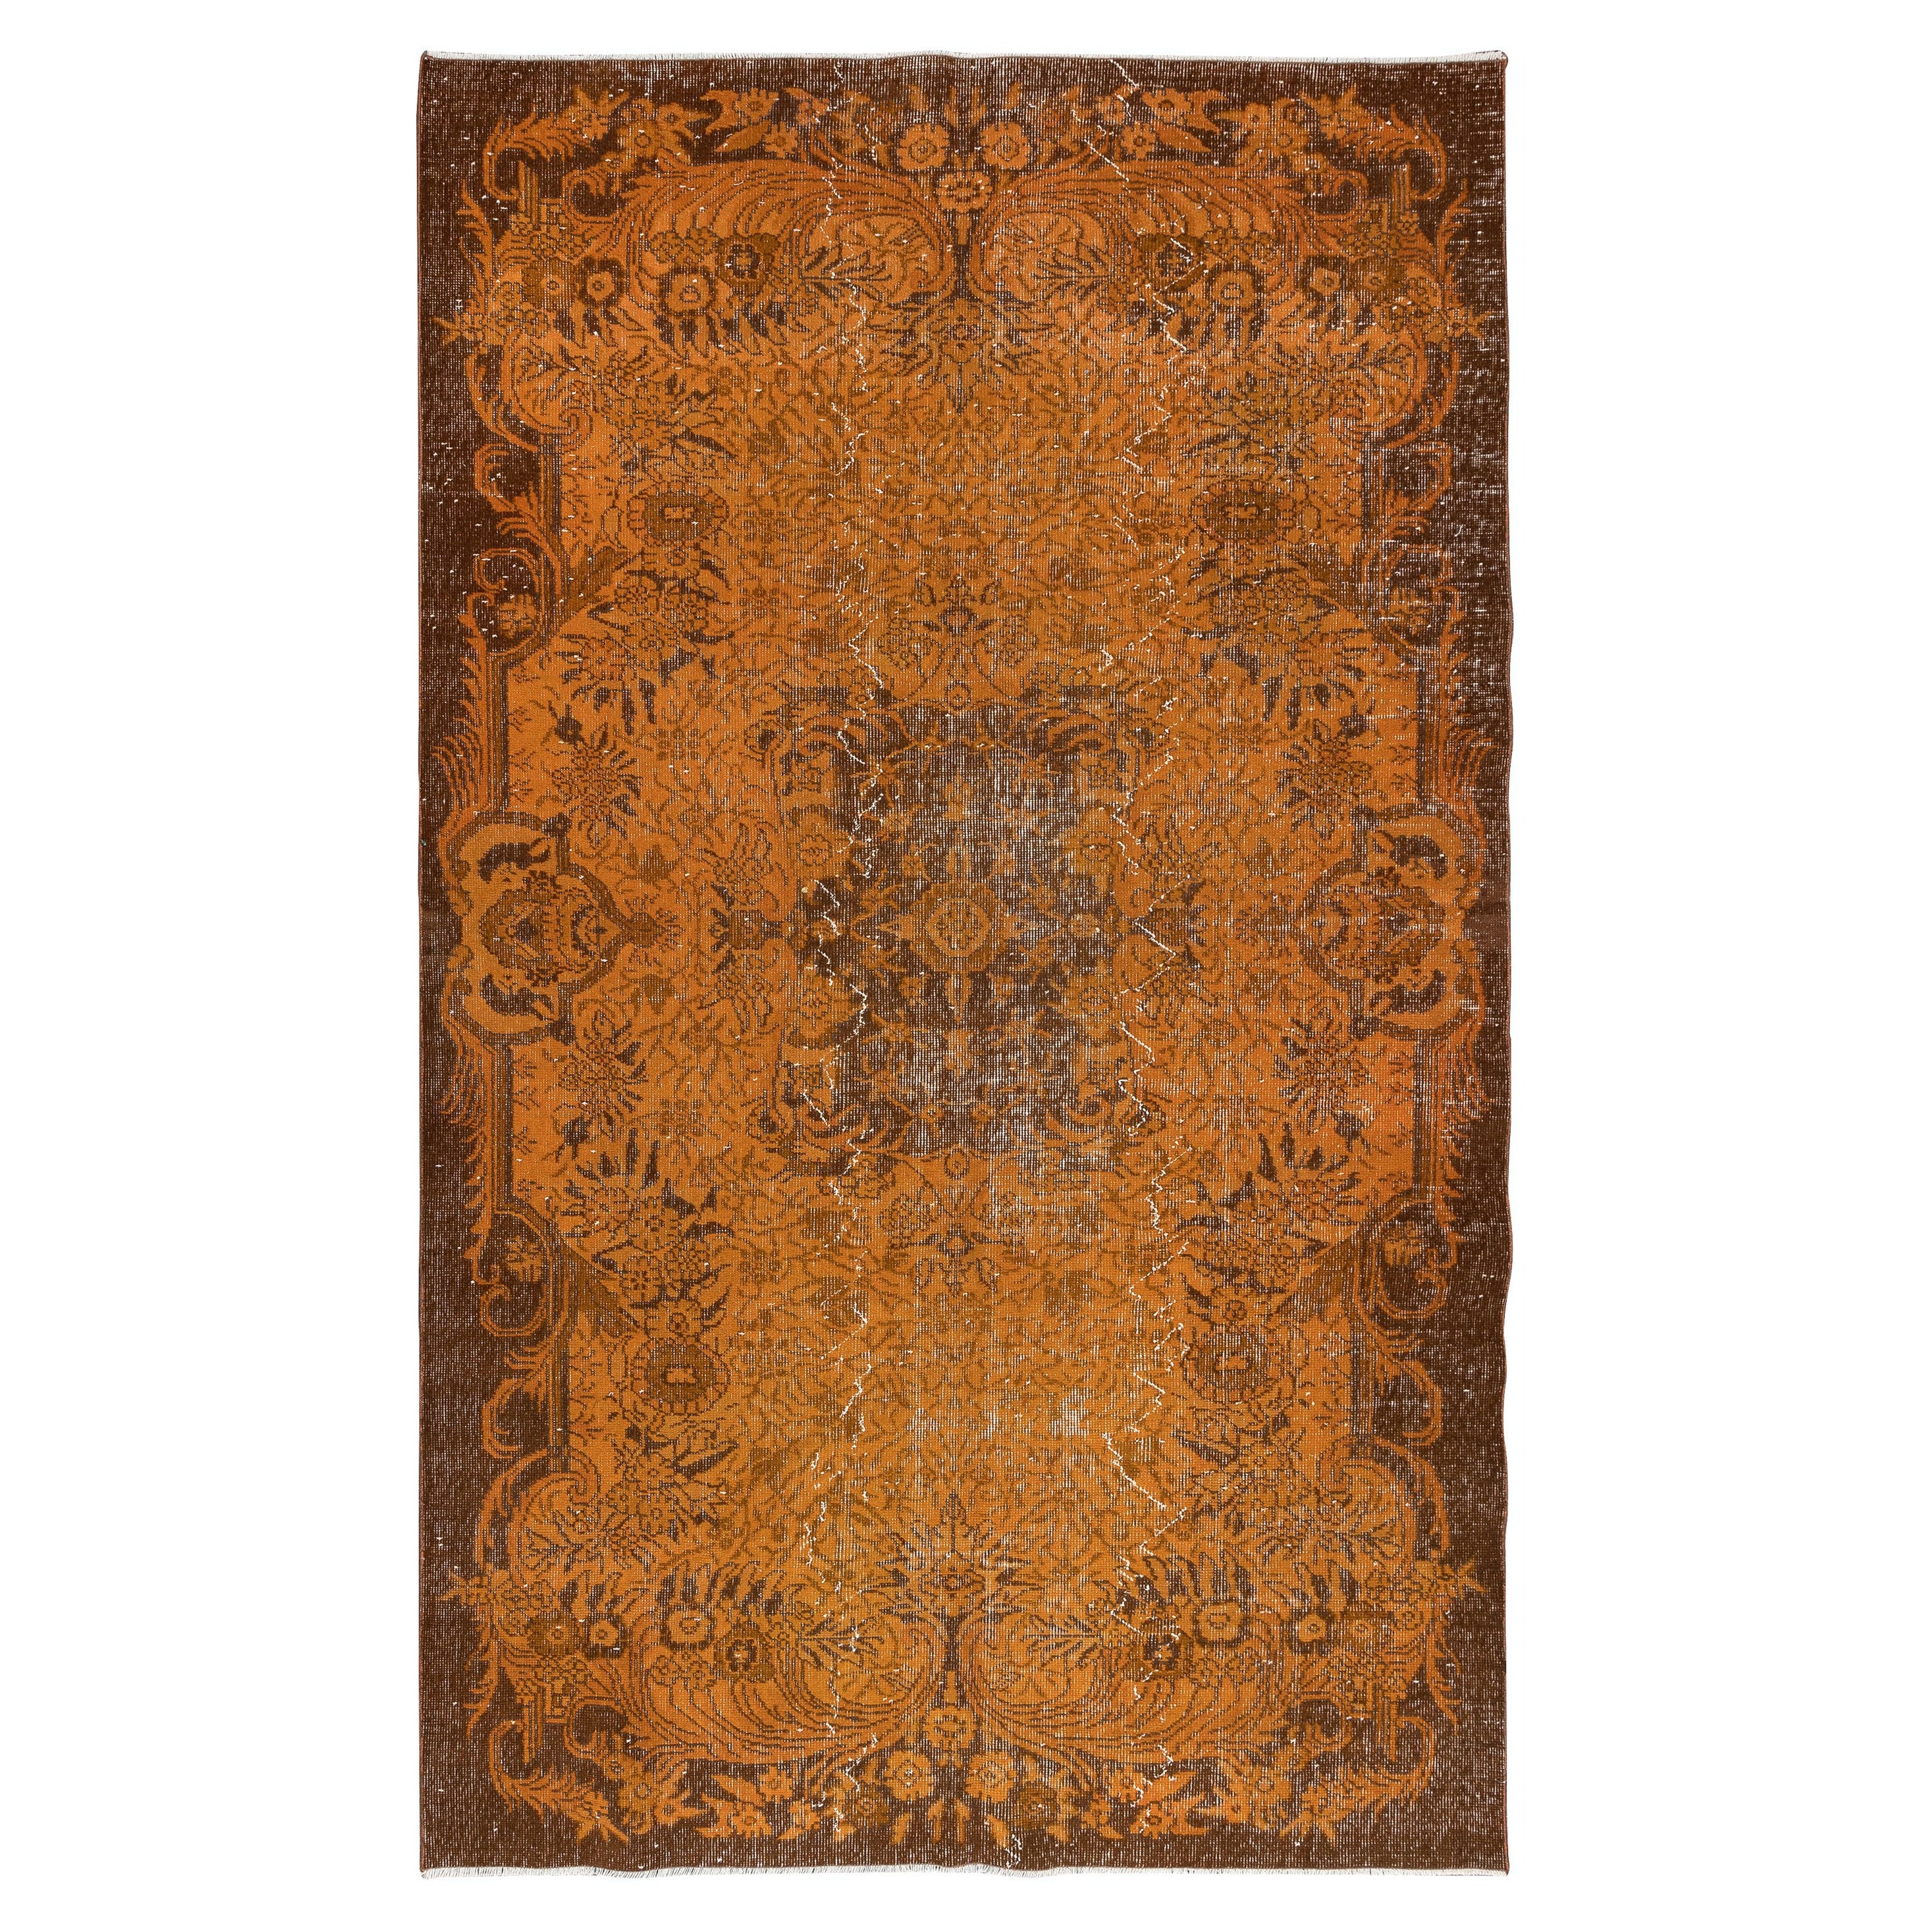 6x10 Ft Modern Handmade Rug in Orange, Vintage Turkish Carpet, Floor Covering